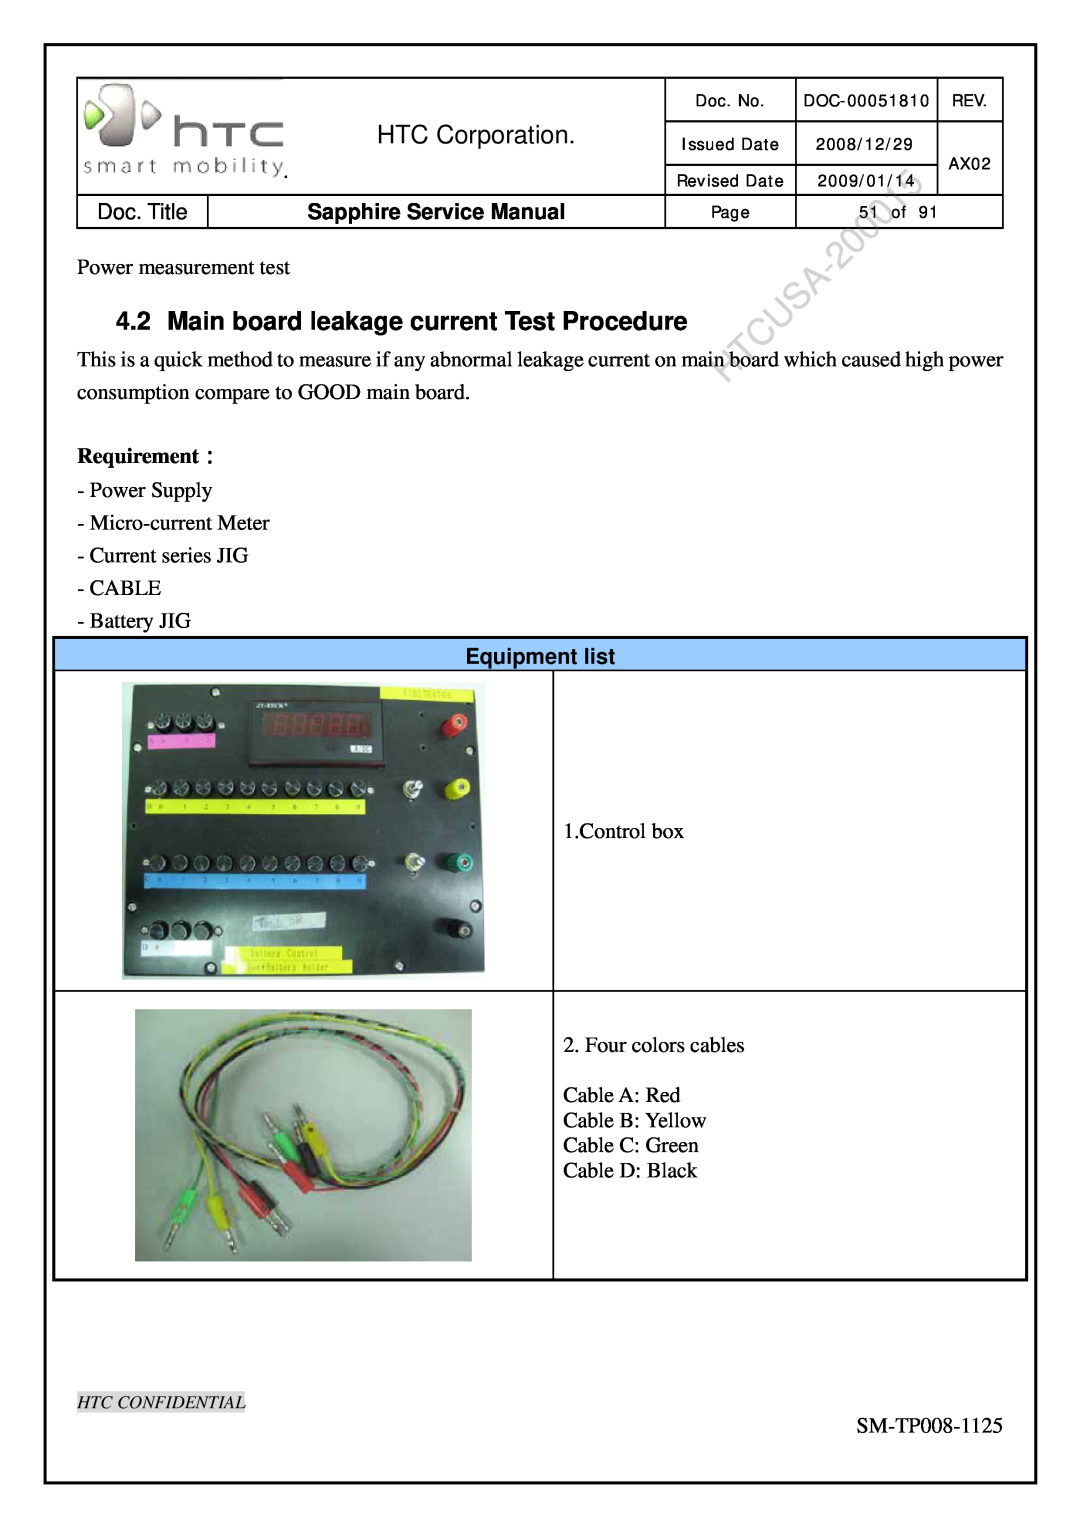 HTC SM-TP008-1125 service manual Main board leakage current Test Procedure, Requirement：, Equipment list, HTC Corporation 